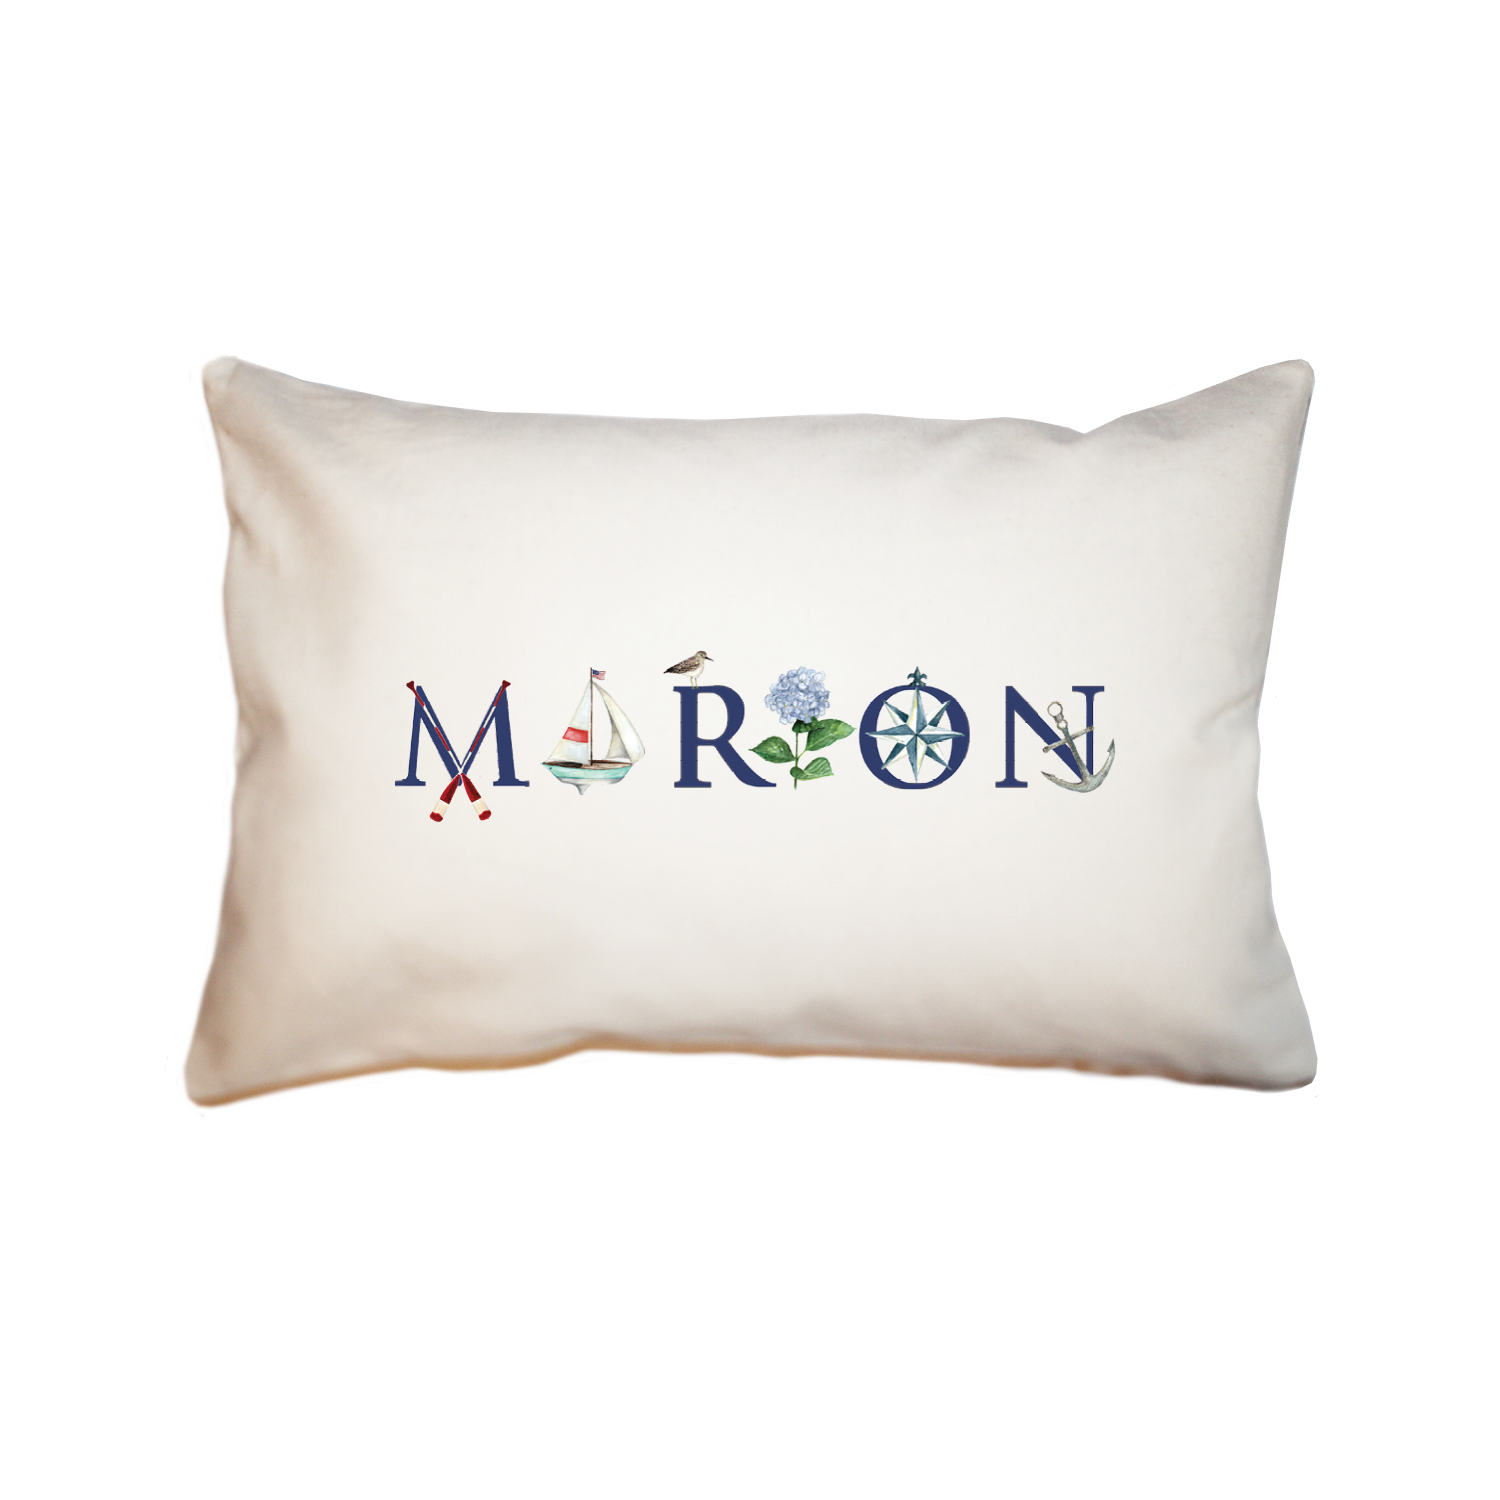 Marion large rectangle pillow